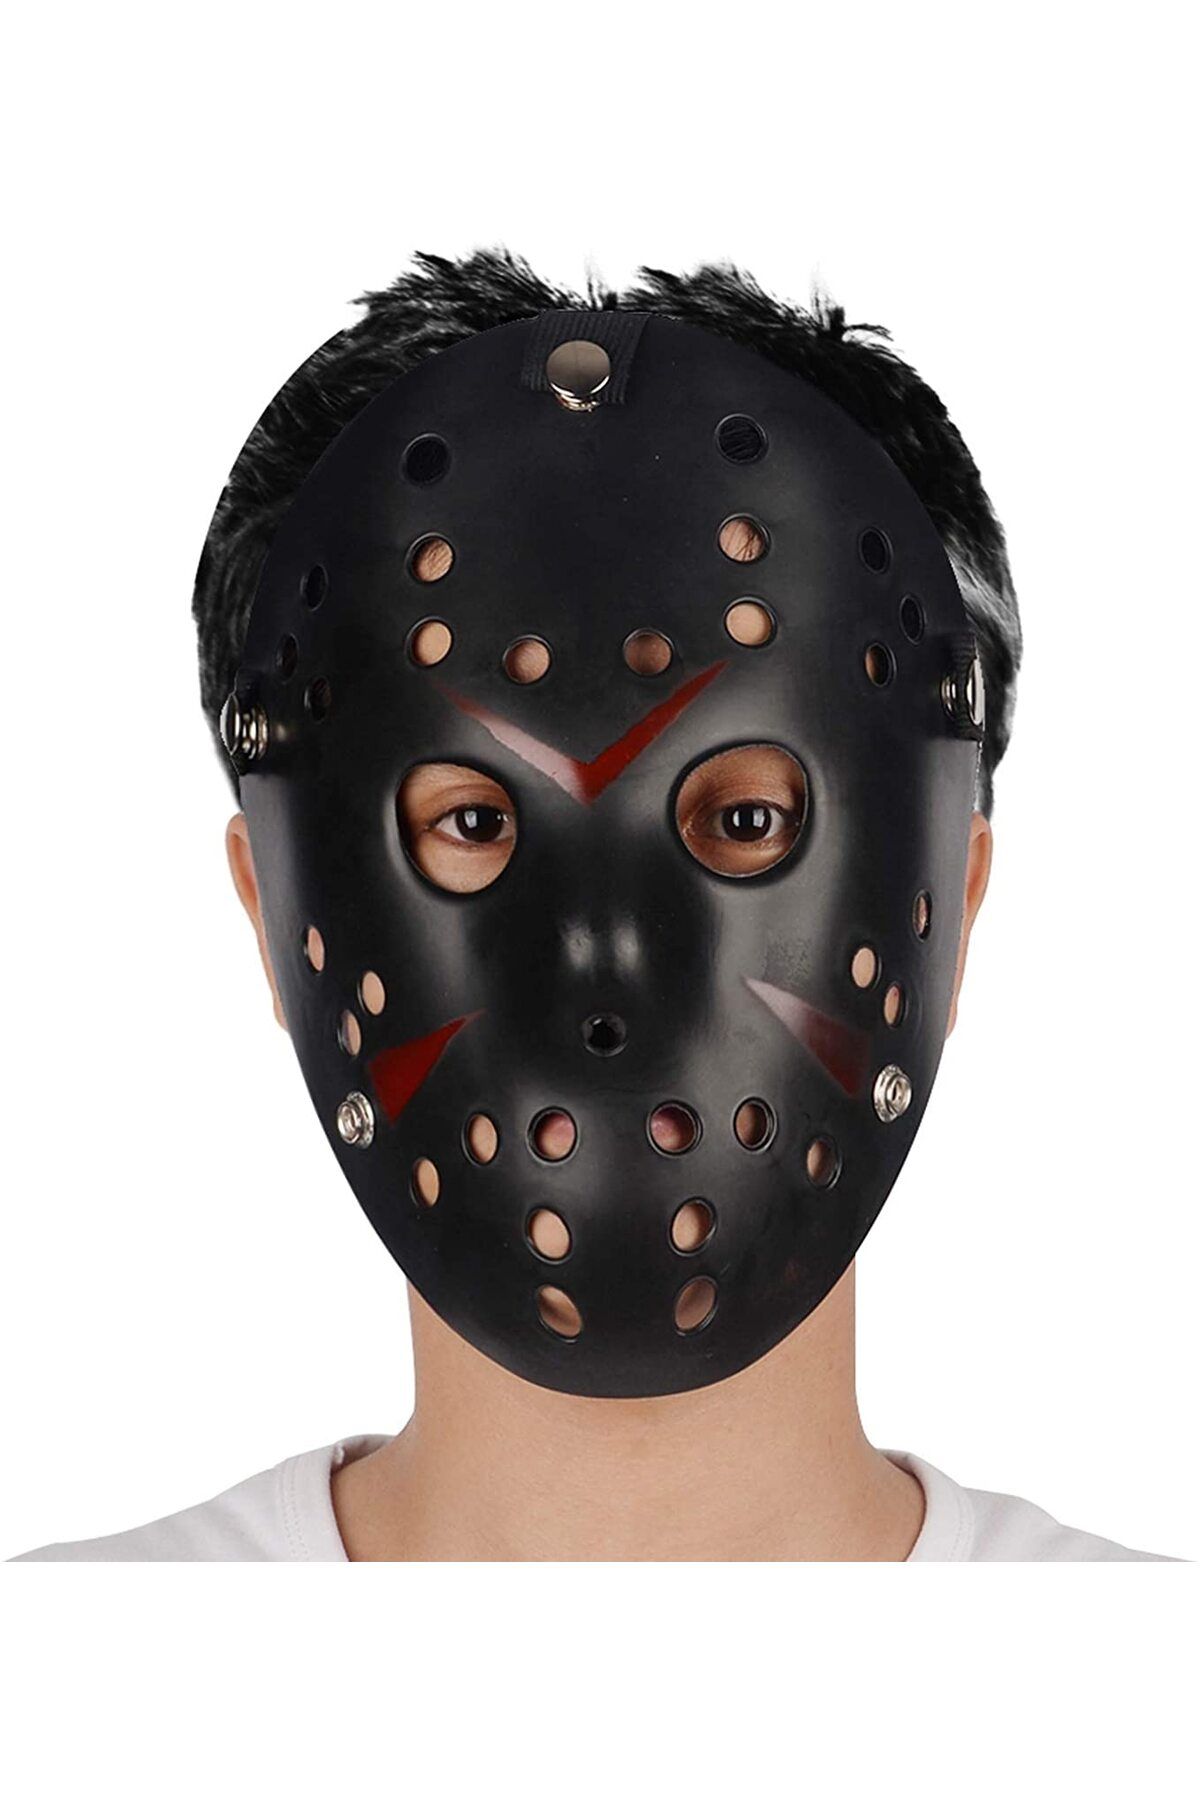 Go İthalat Siyah Renk Kırmızı Çizgili Tam Yüz Hokey Jason Maskesi Hannibal Maskesi (2818)